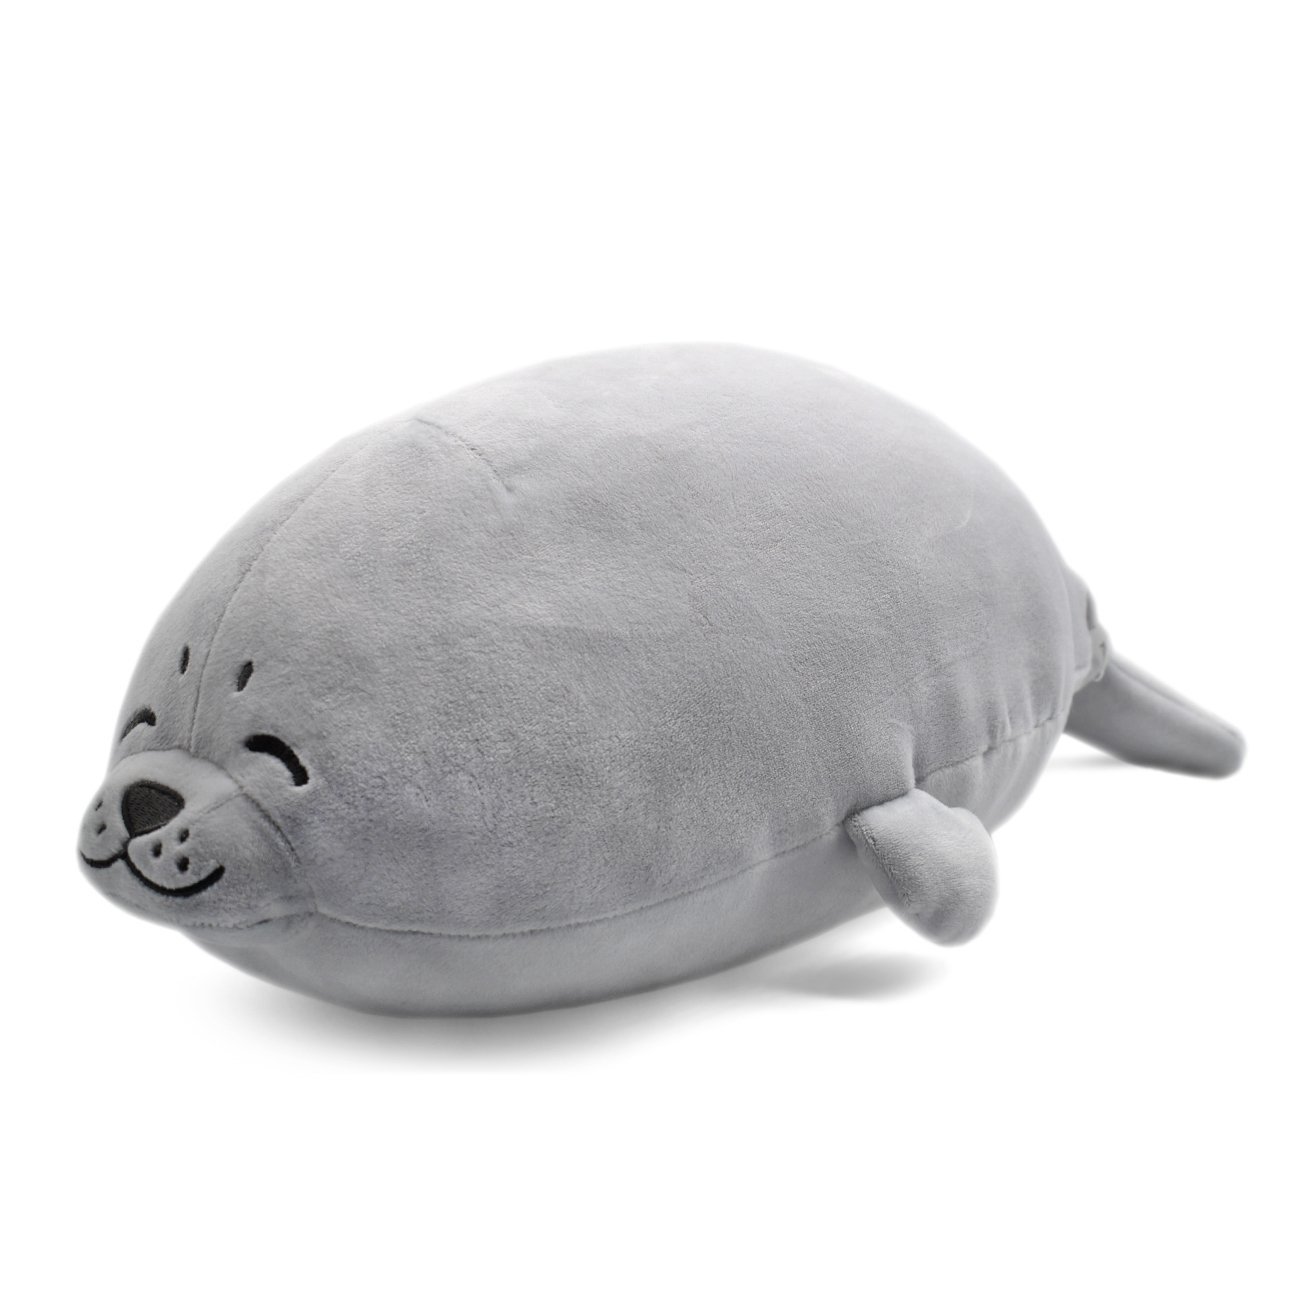 sunyou Plush Cute Seal Pillow - Stuffed Cotton Soft Animal Toy Grey